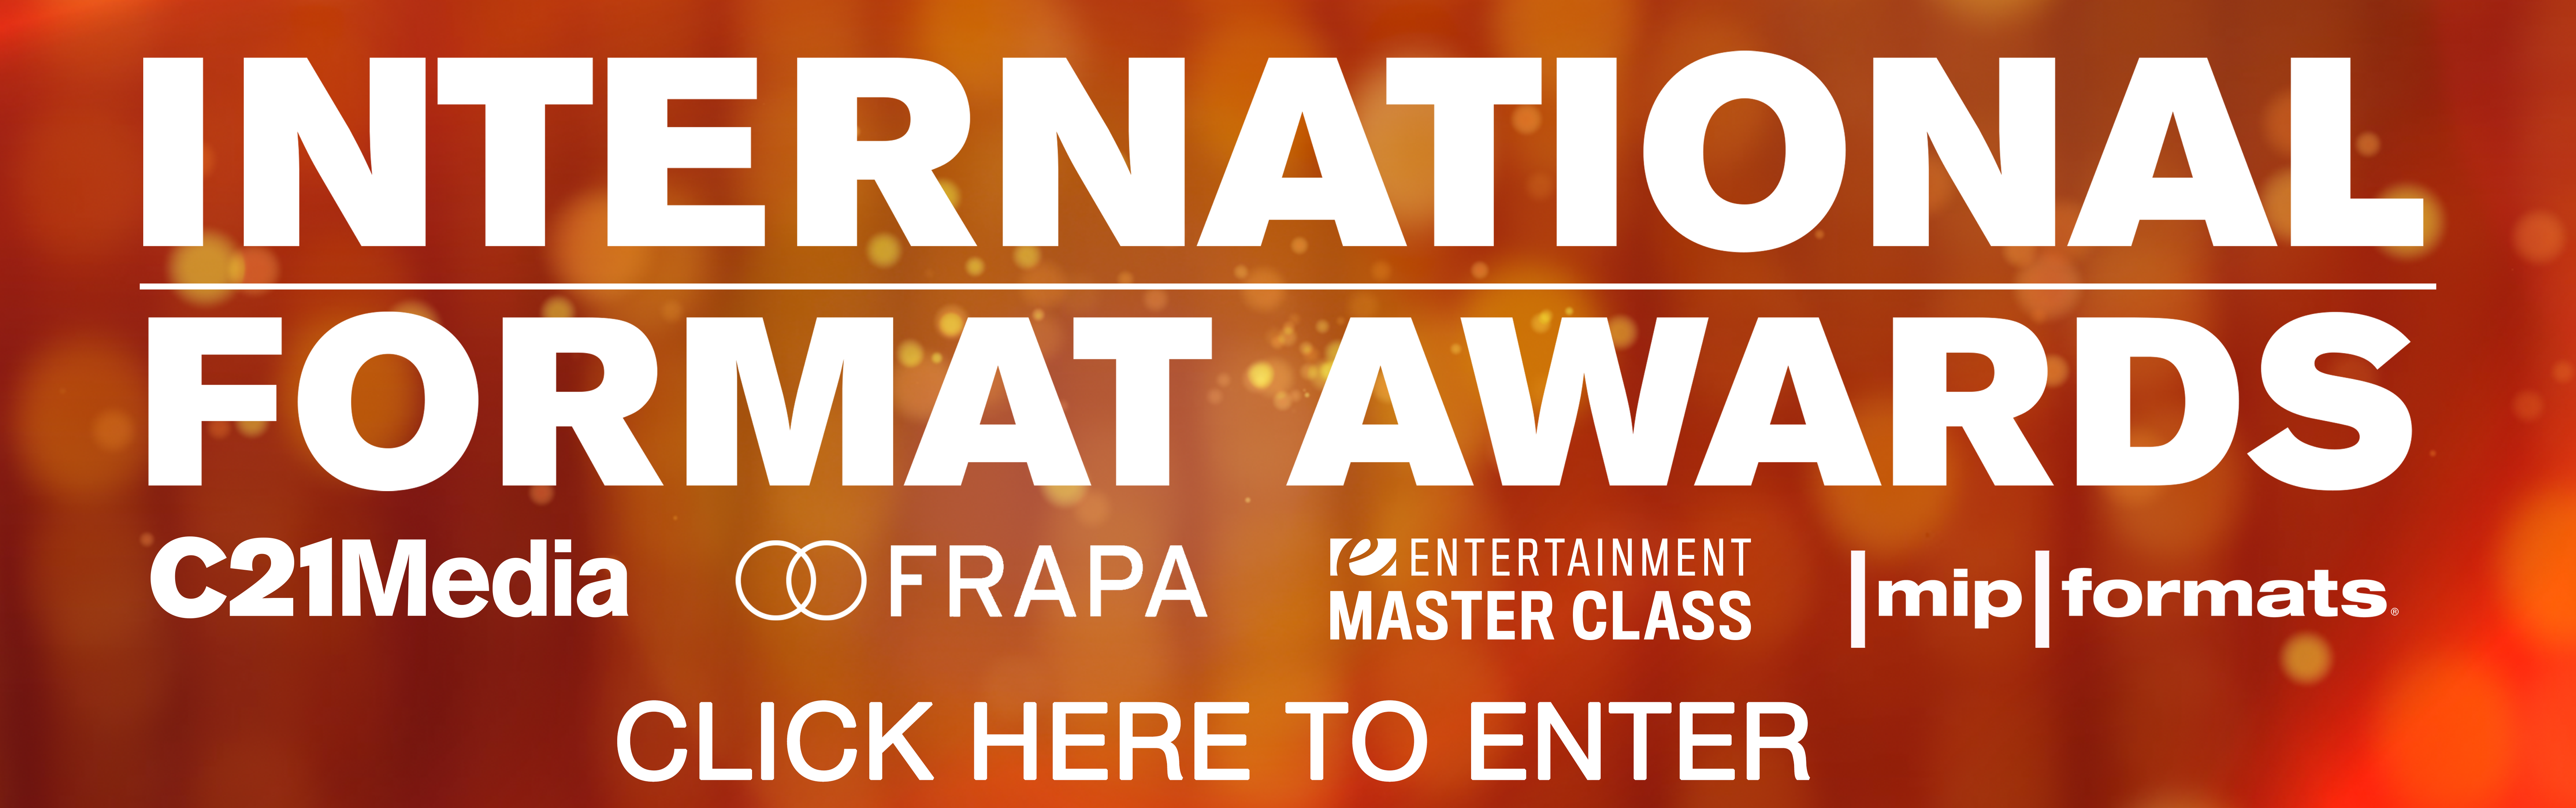 Format Awards banner